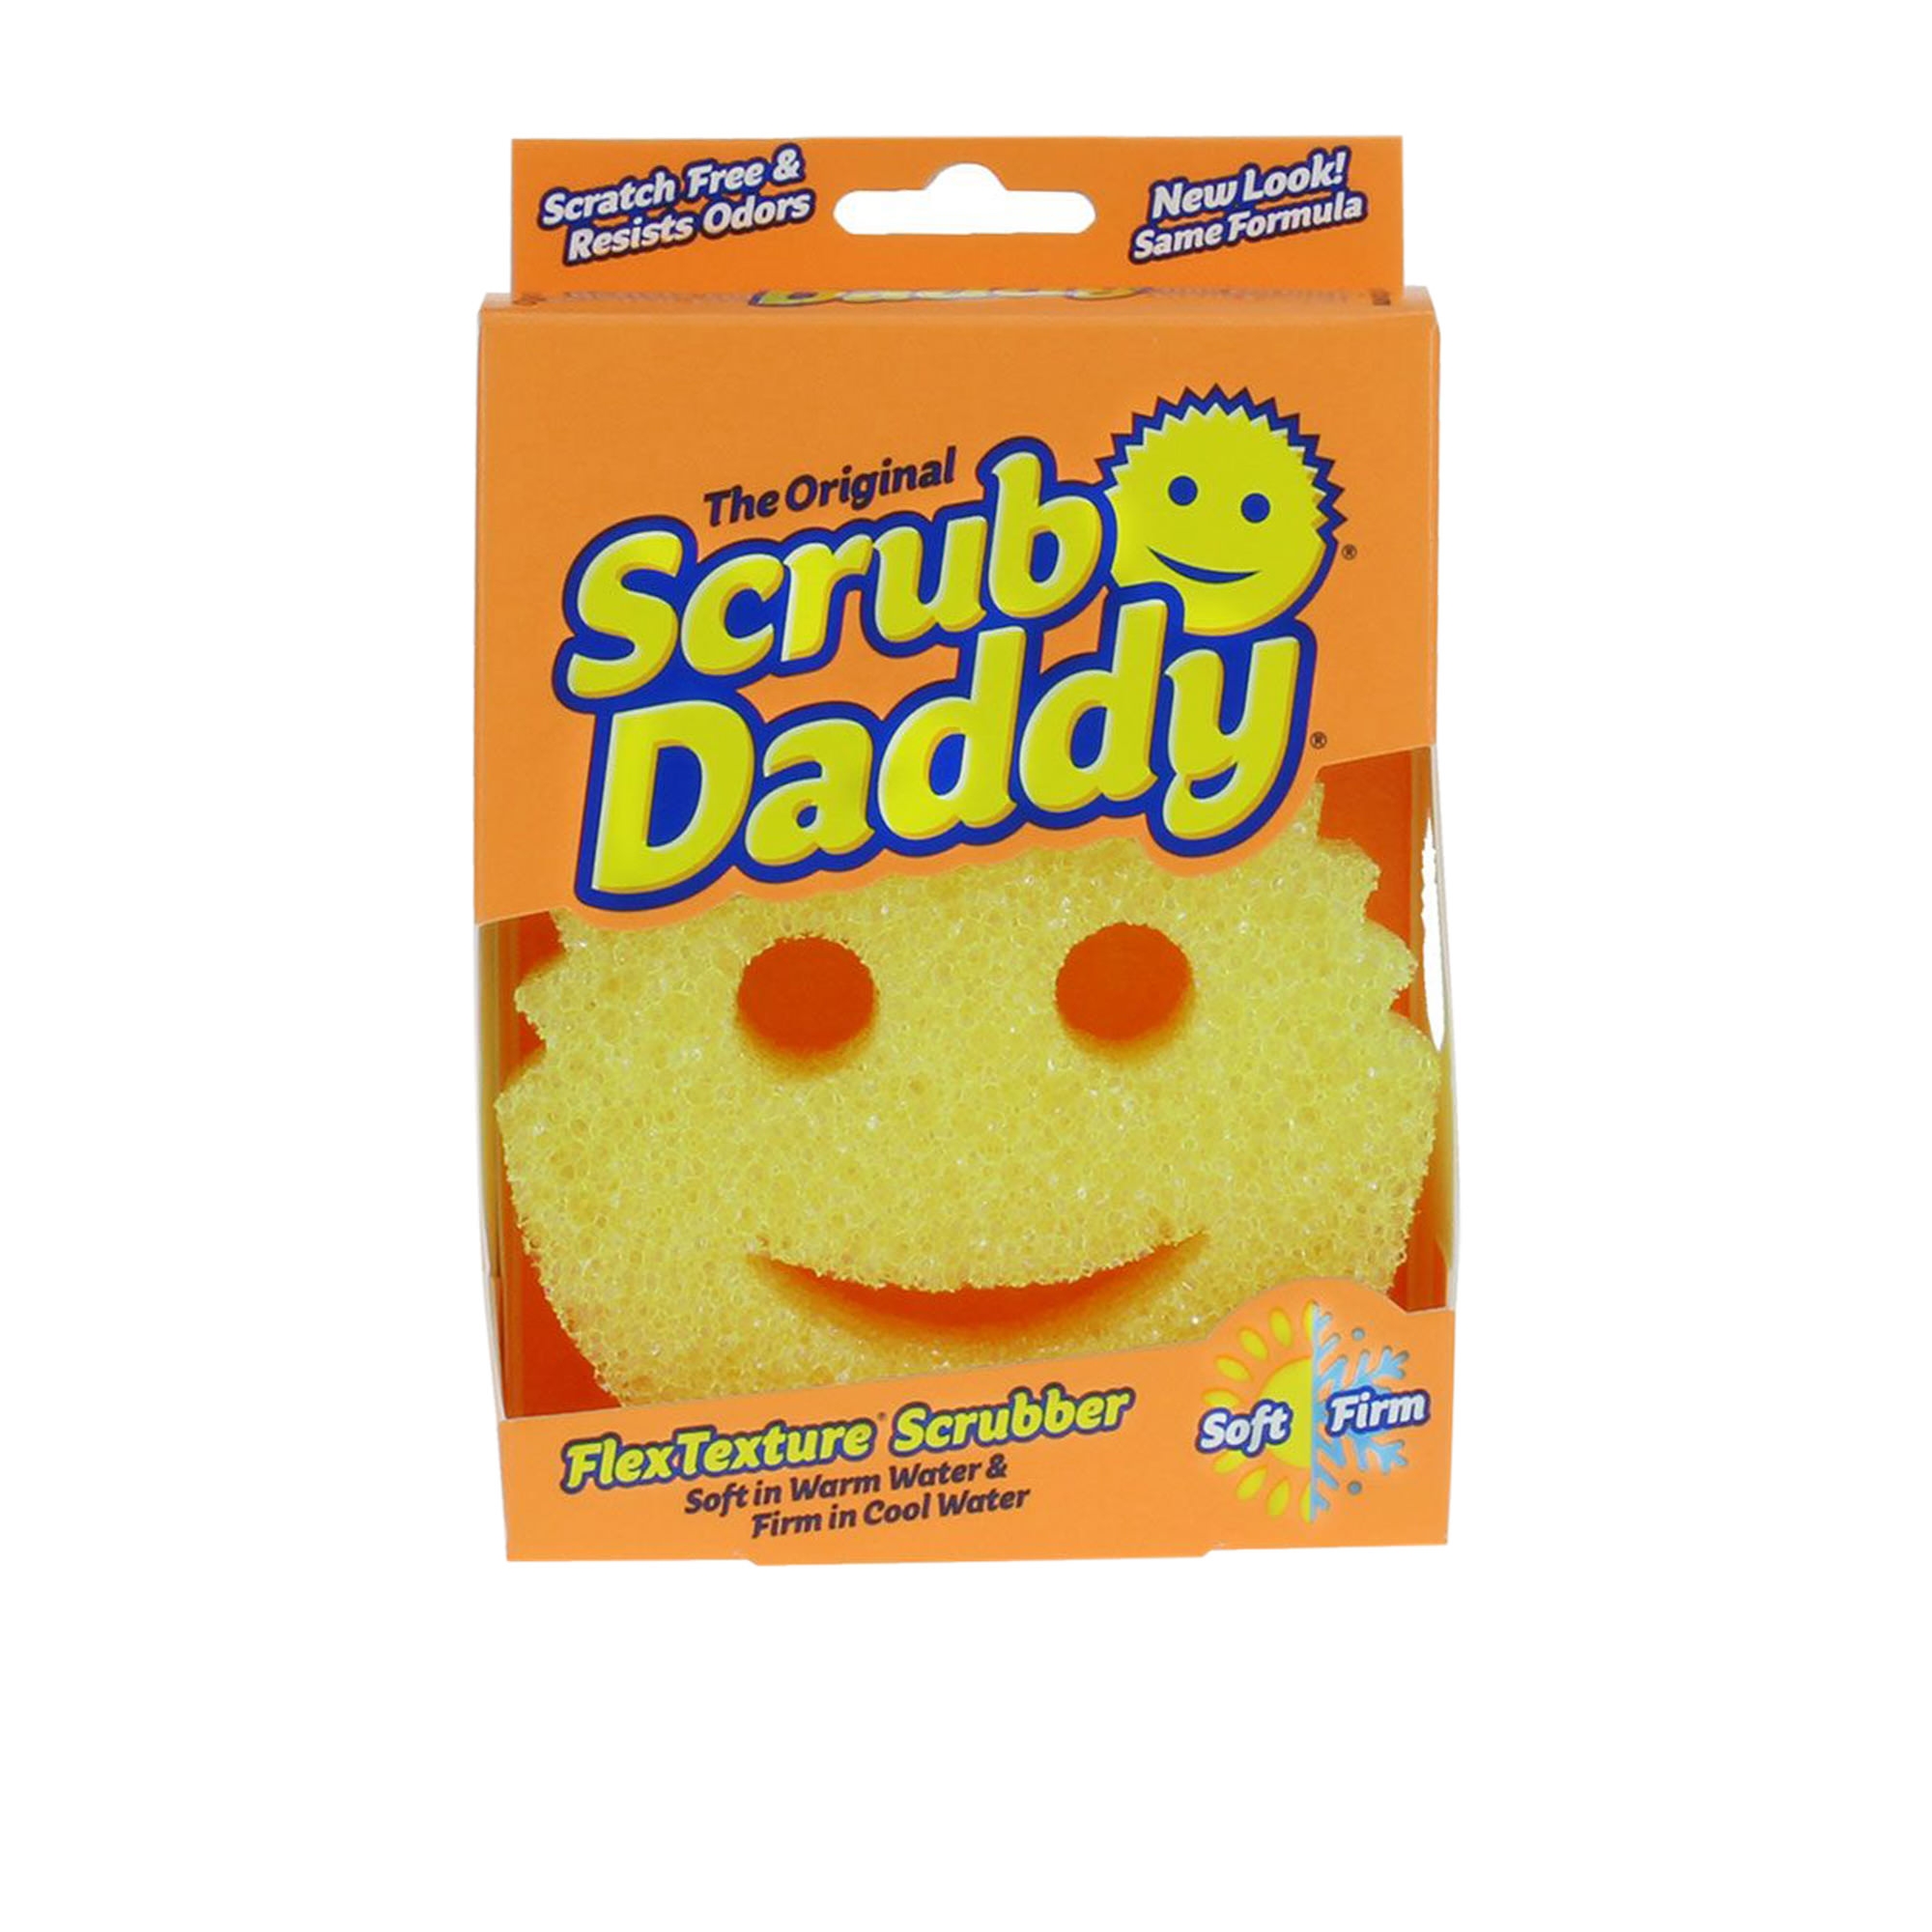 Scrub Daddy FlexTexture Scrubber Yellow Image 1